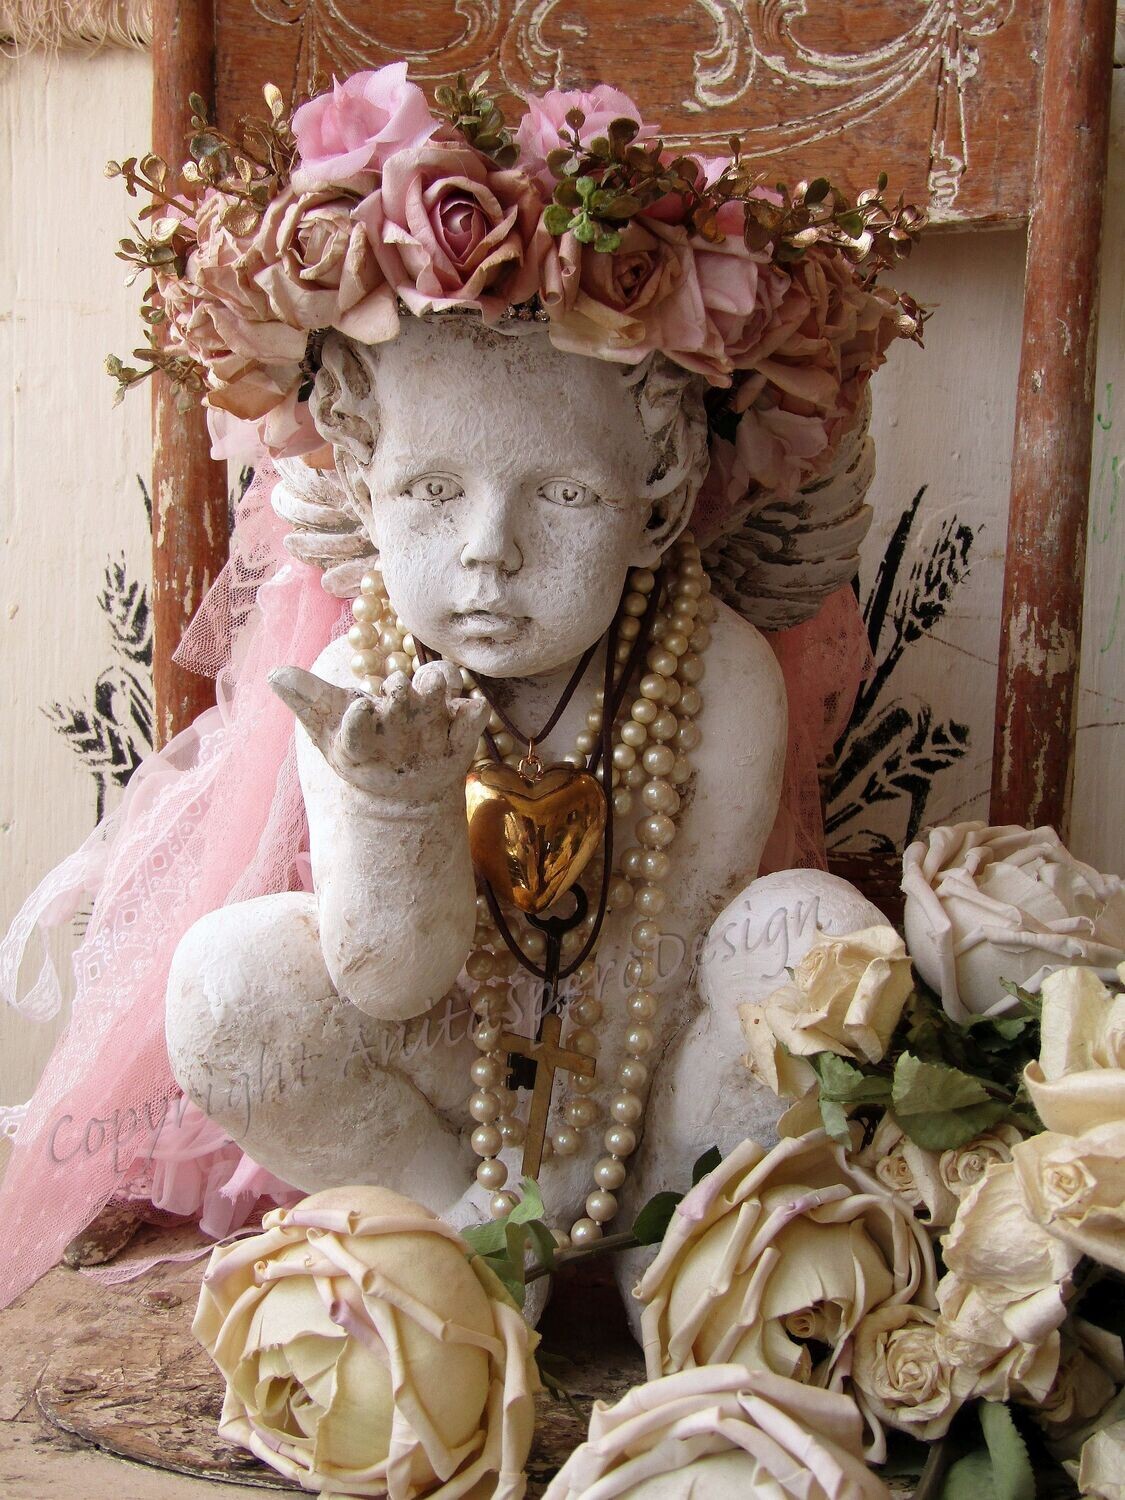 Cherub statue with pink rose halo crown by Anita Spero